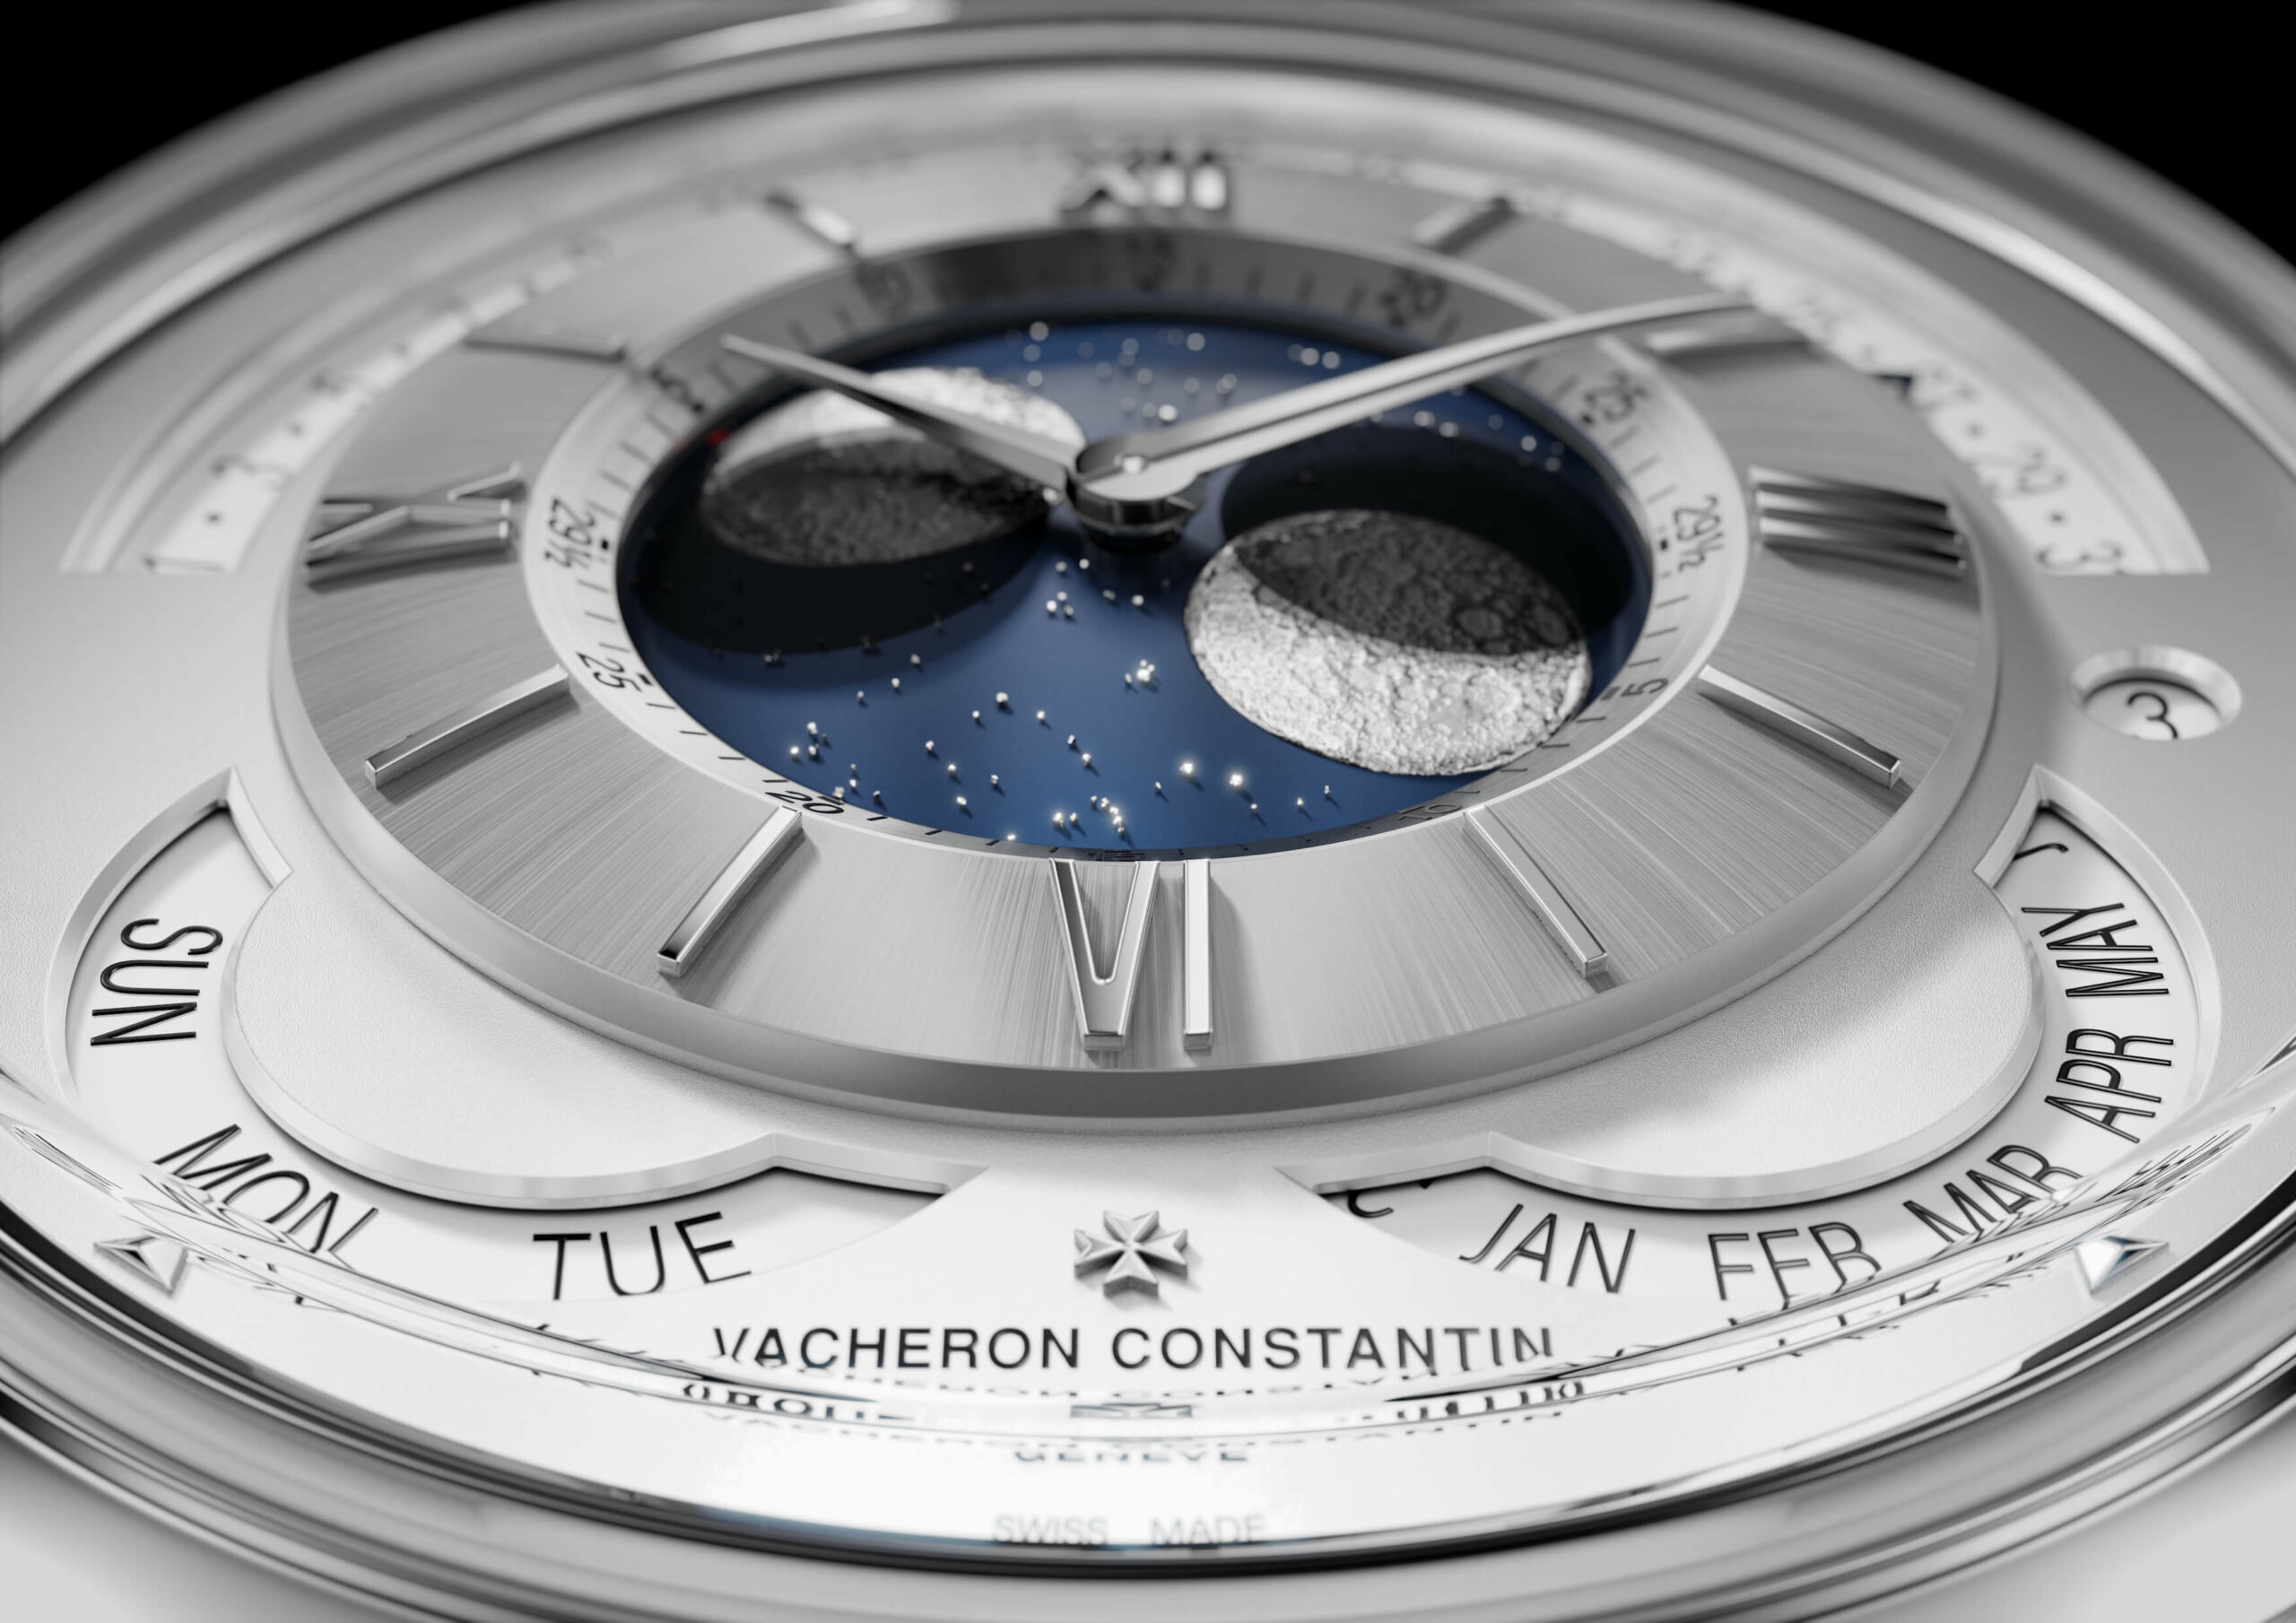 Vacheron Constantin luxury watch